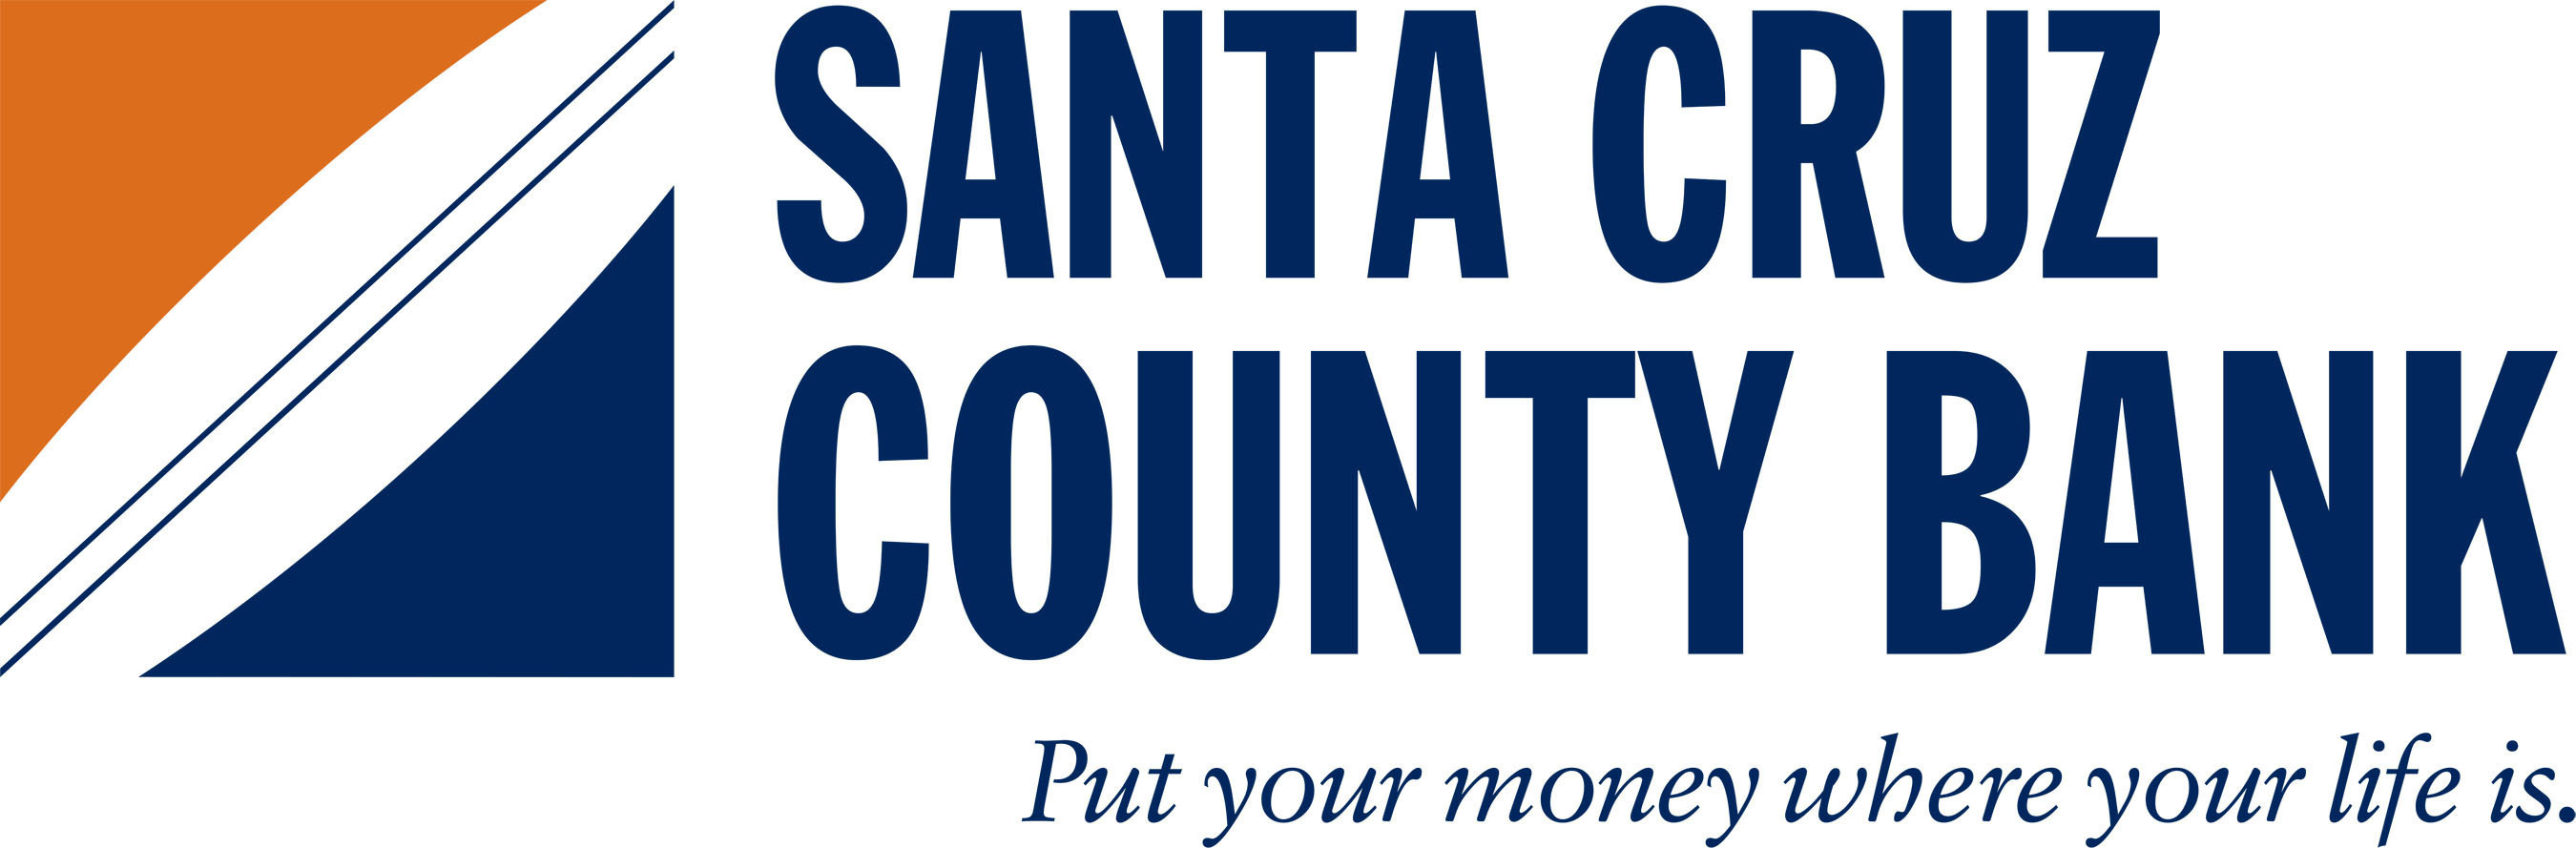 Santa Cruz County Bank logo. (PRNewsFoto/Santa Cruz County Bank) (PRNewsFoto/SANTA CRUZ COUNTY BANK) (PRNewsFoto/SANTA CRUZ COUNTY BANK)